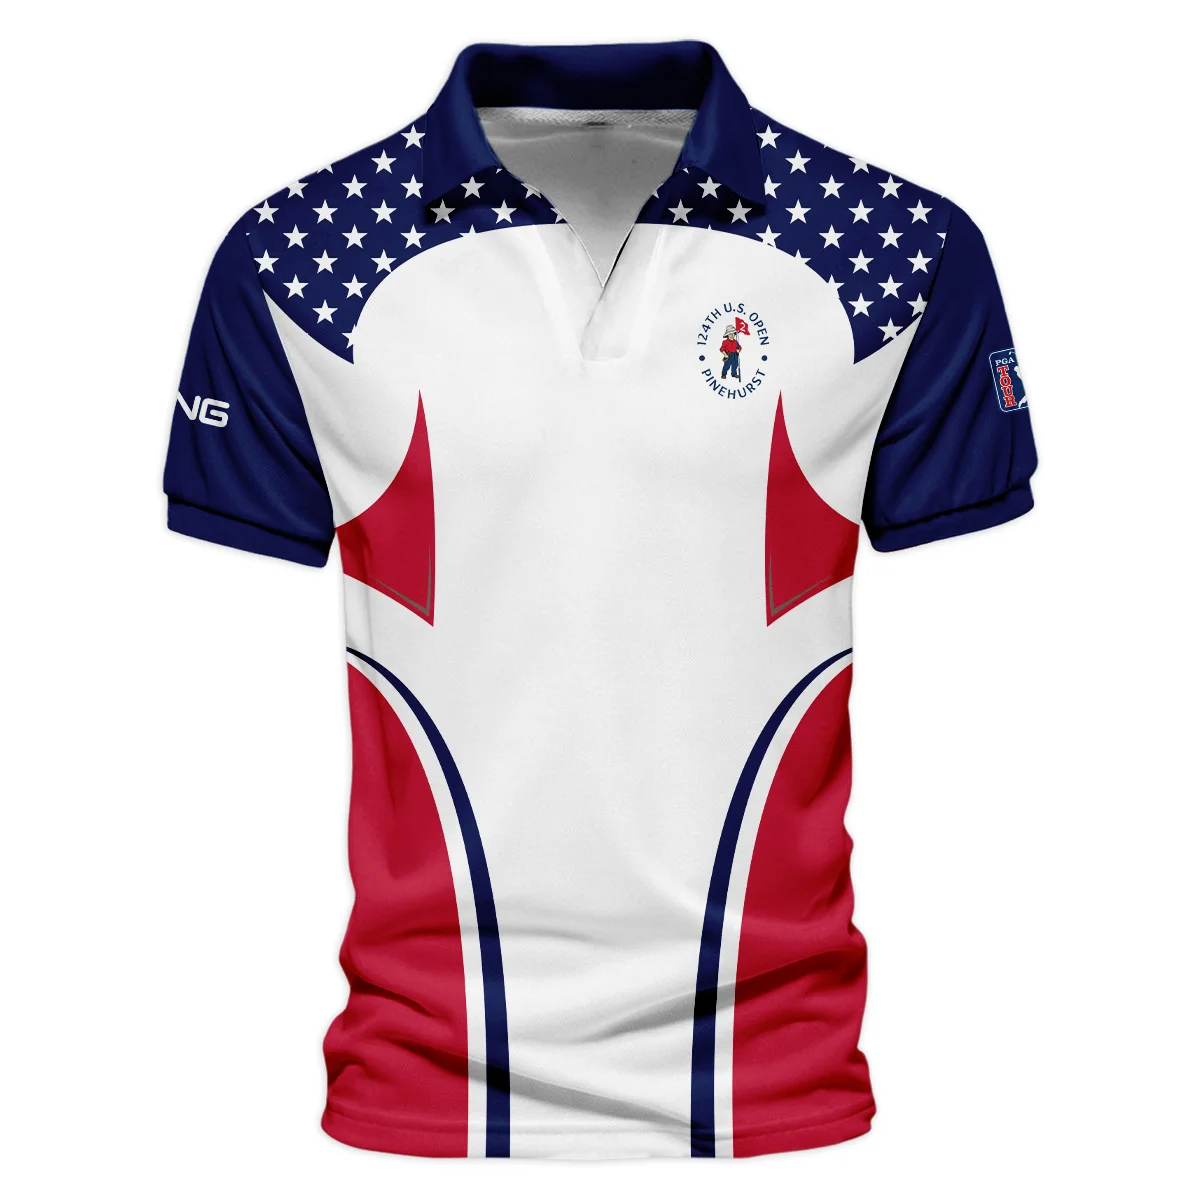 124th U.S. Open Pinehurst Ping Stars White Dark Blue Red Line Sleeveless Jacket Style Classic Sleeveless Jacket